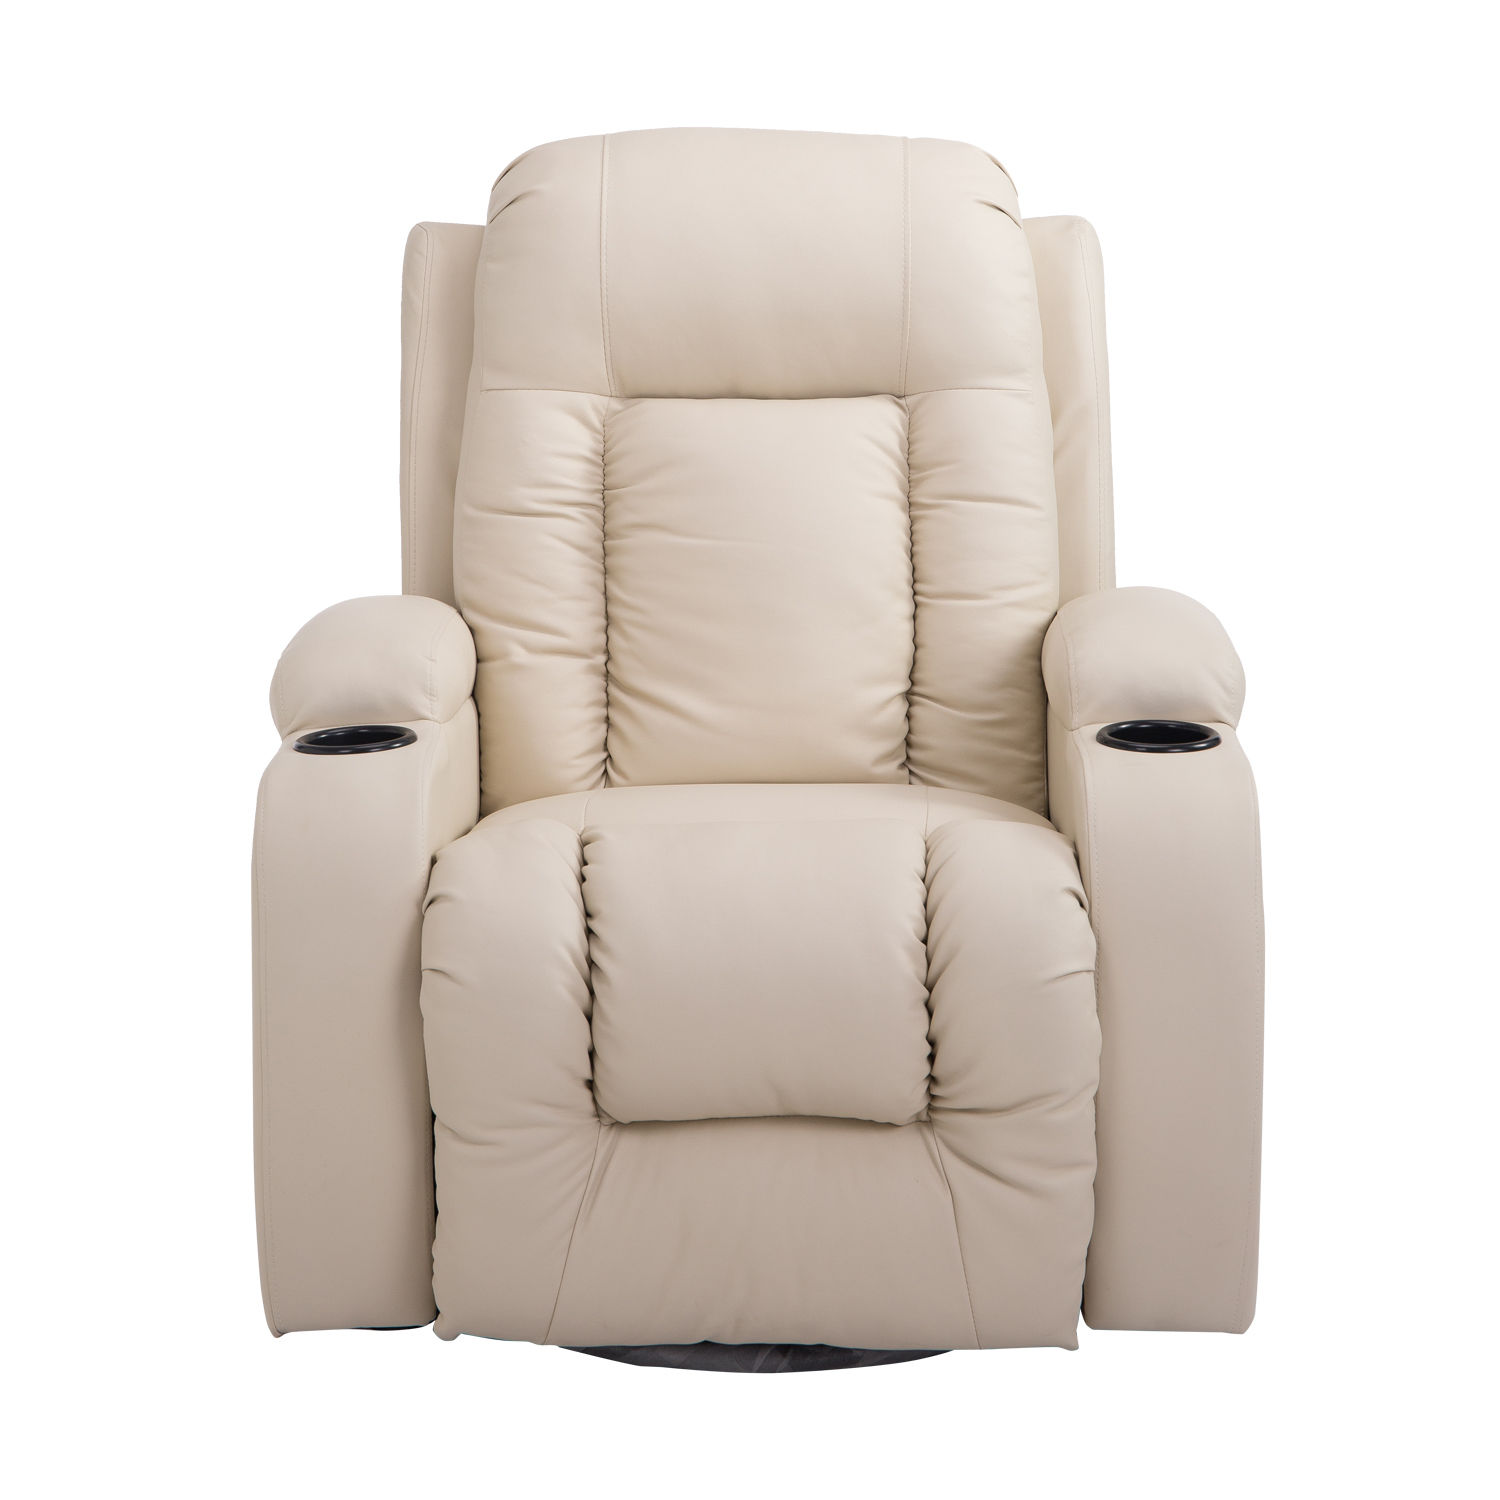 HOMCOM Massage Recliner Chair Heated Vibrating PU Leather Ergonomic Lounge 360 Degree Swivel with Remote - Cream White - image 4 of 8